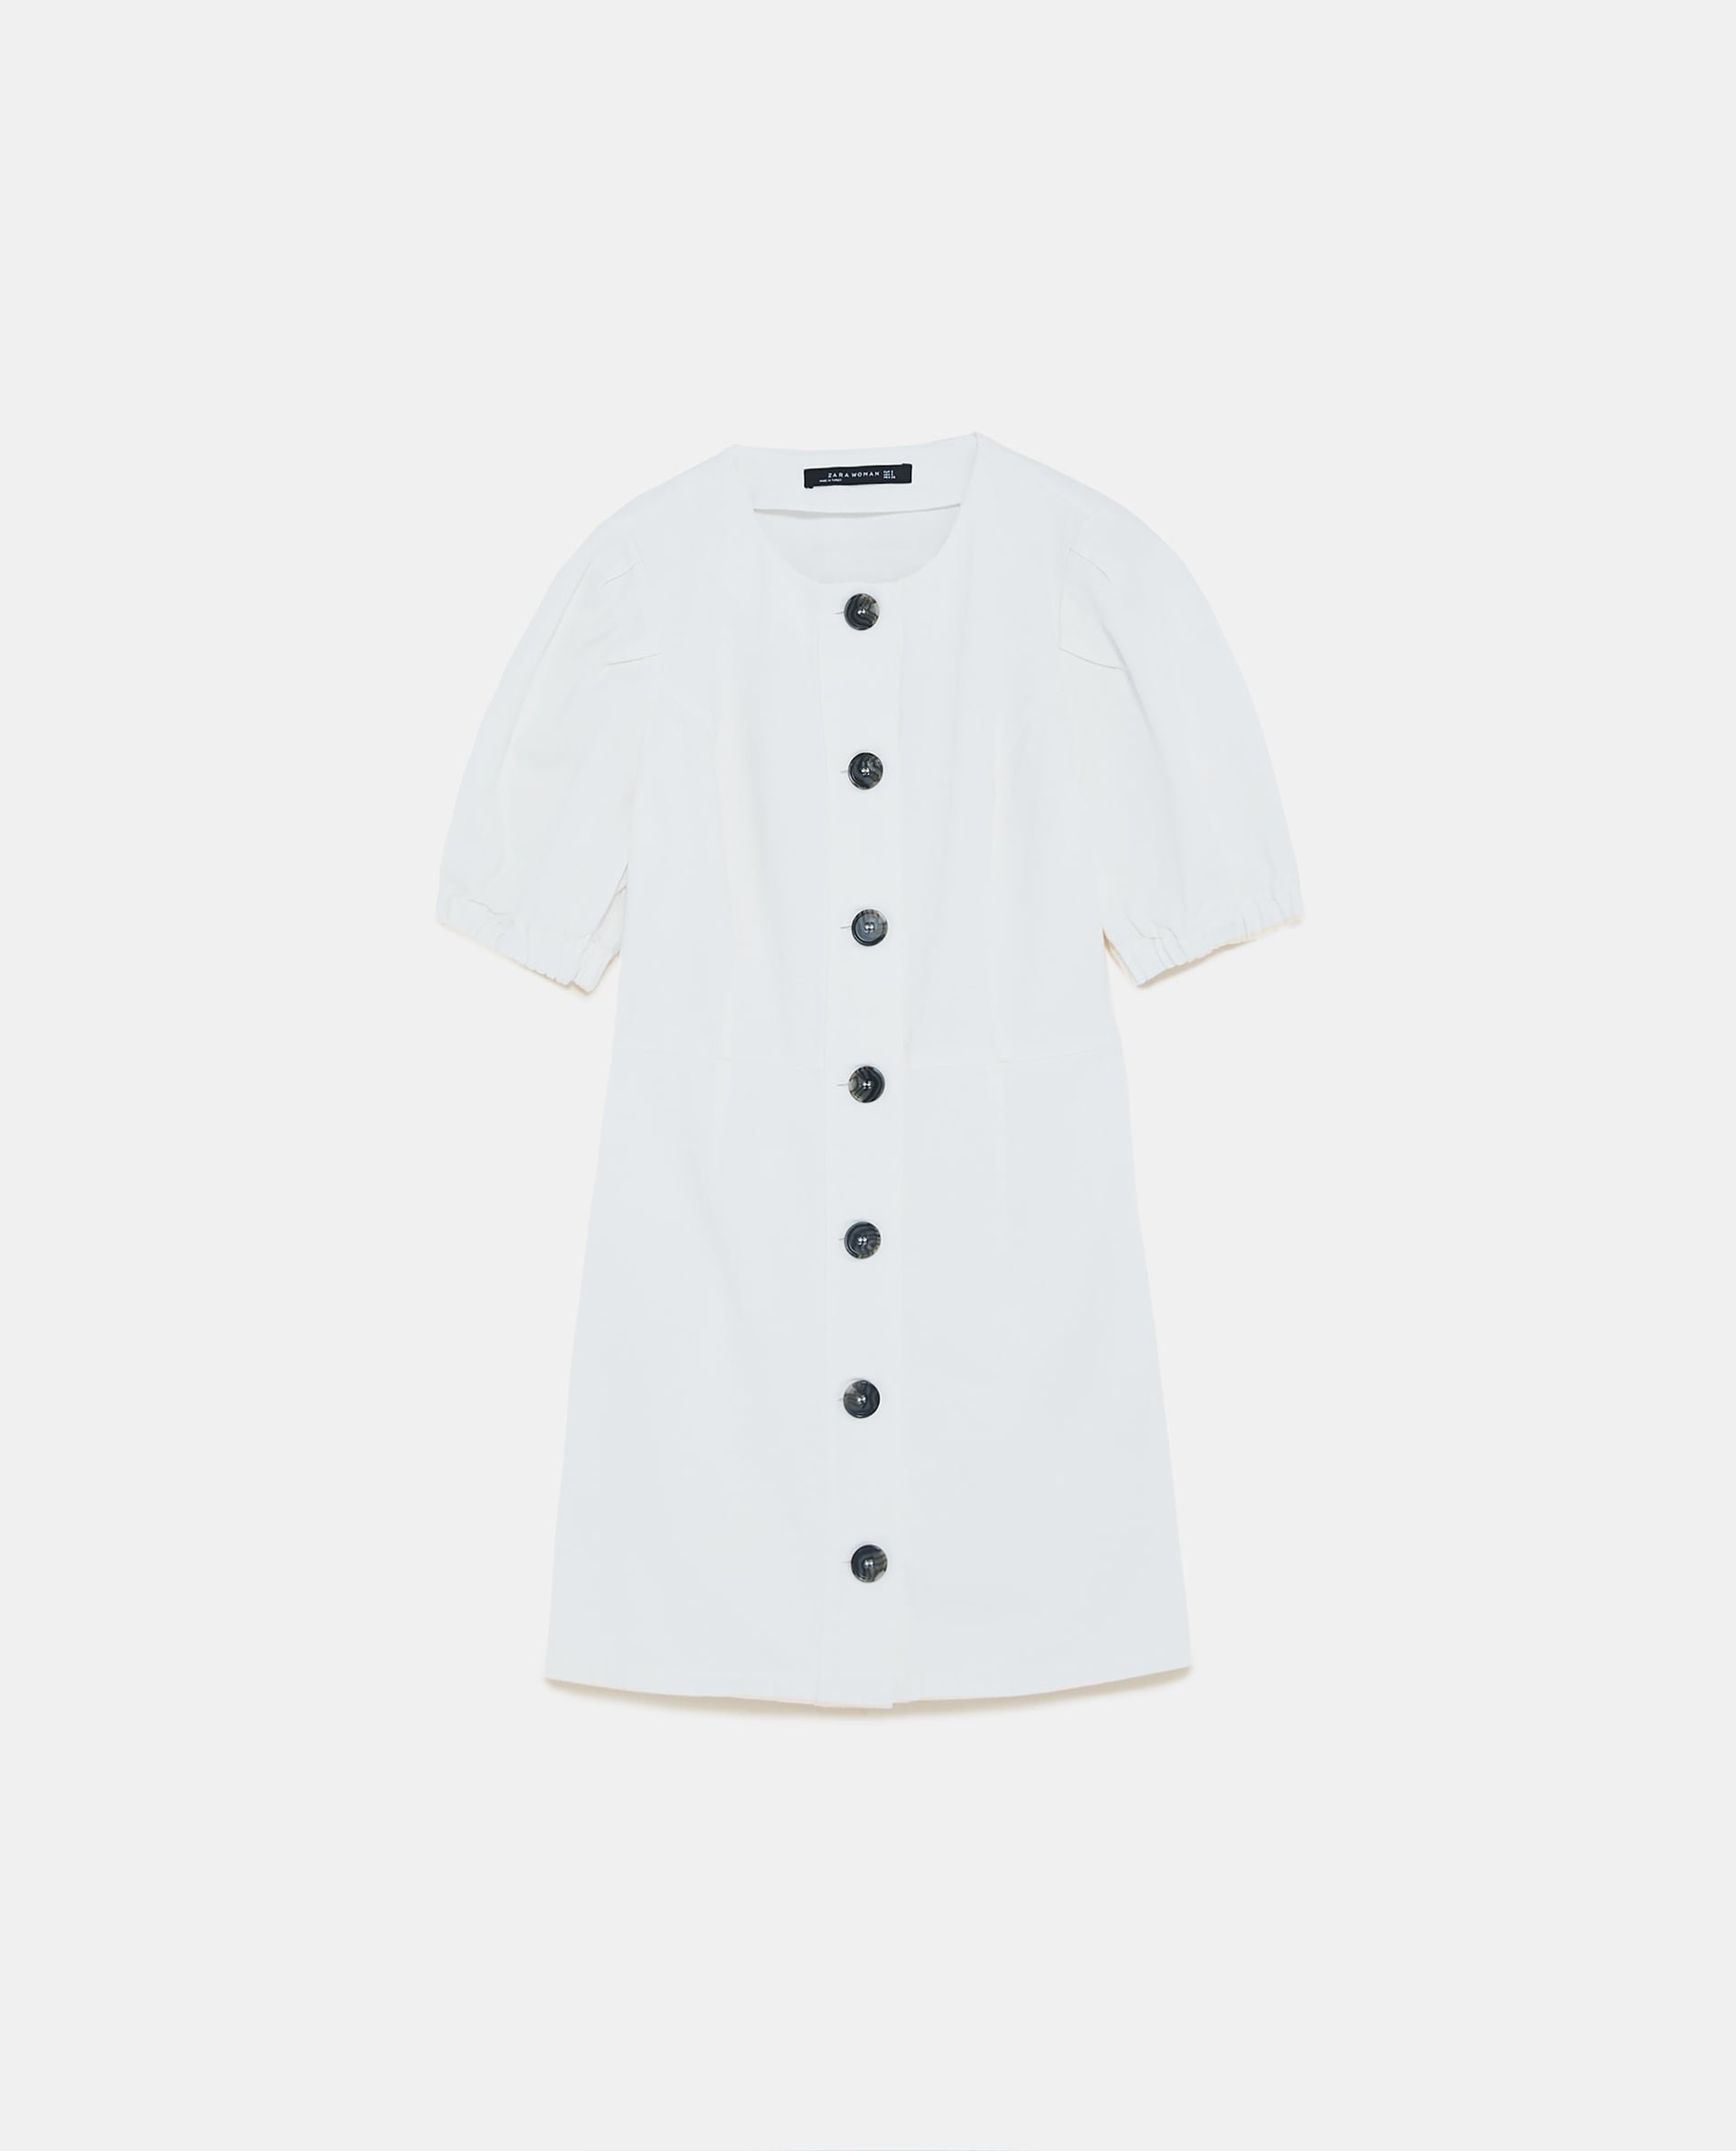 Zara Puff Sleeve Dress in White.jpg